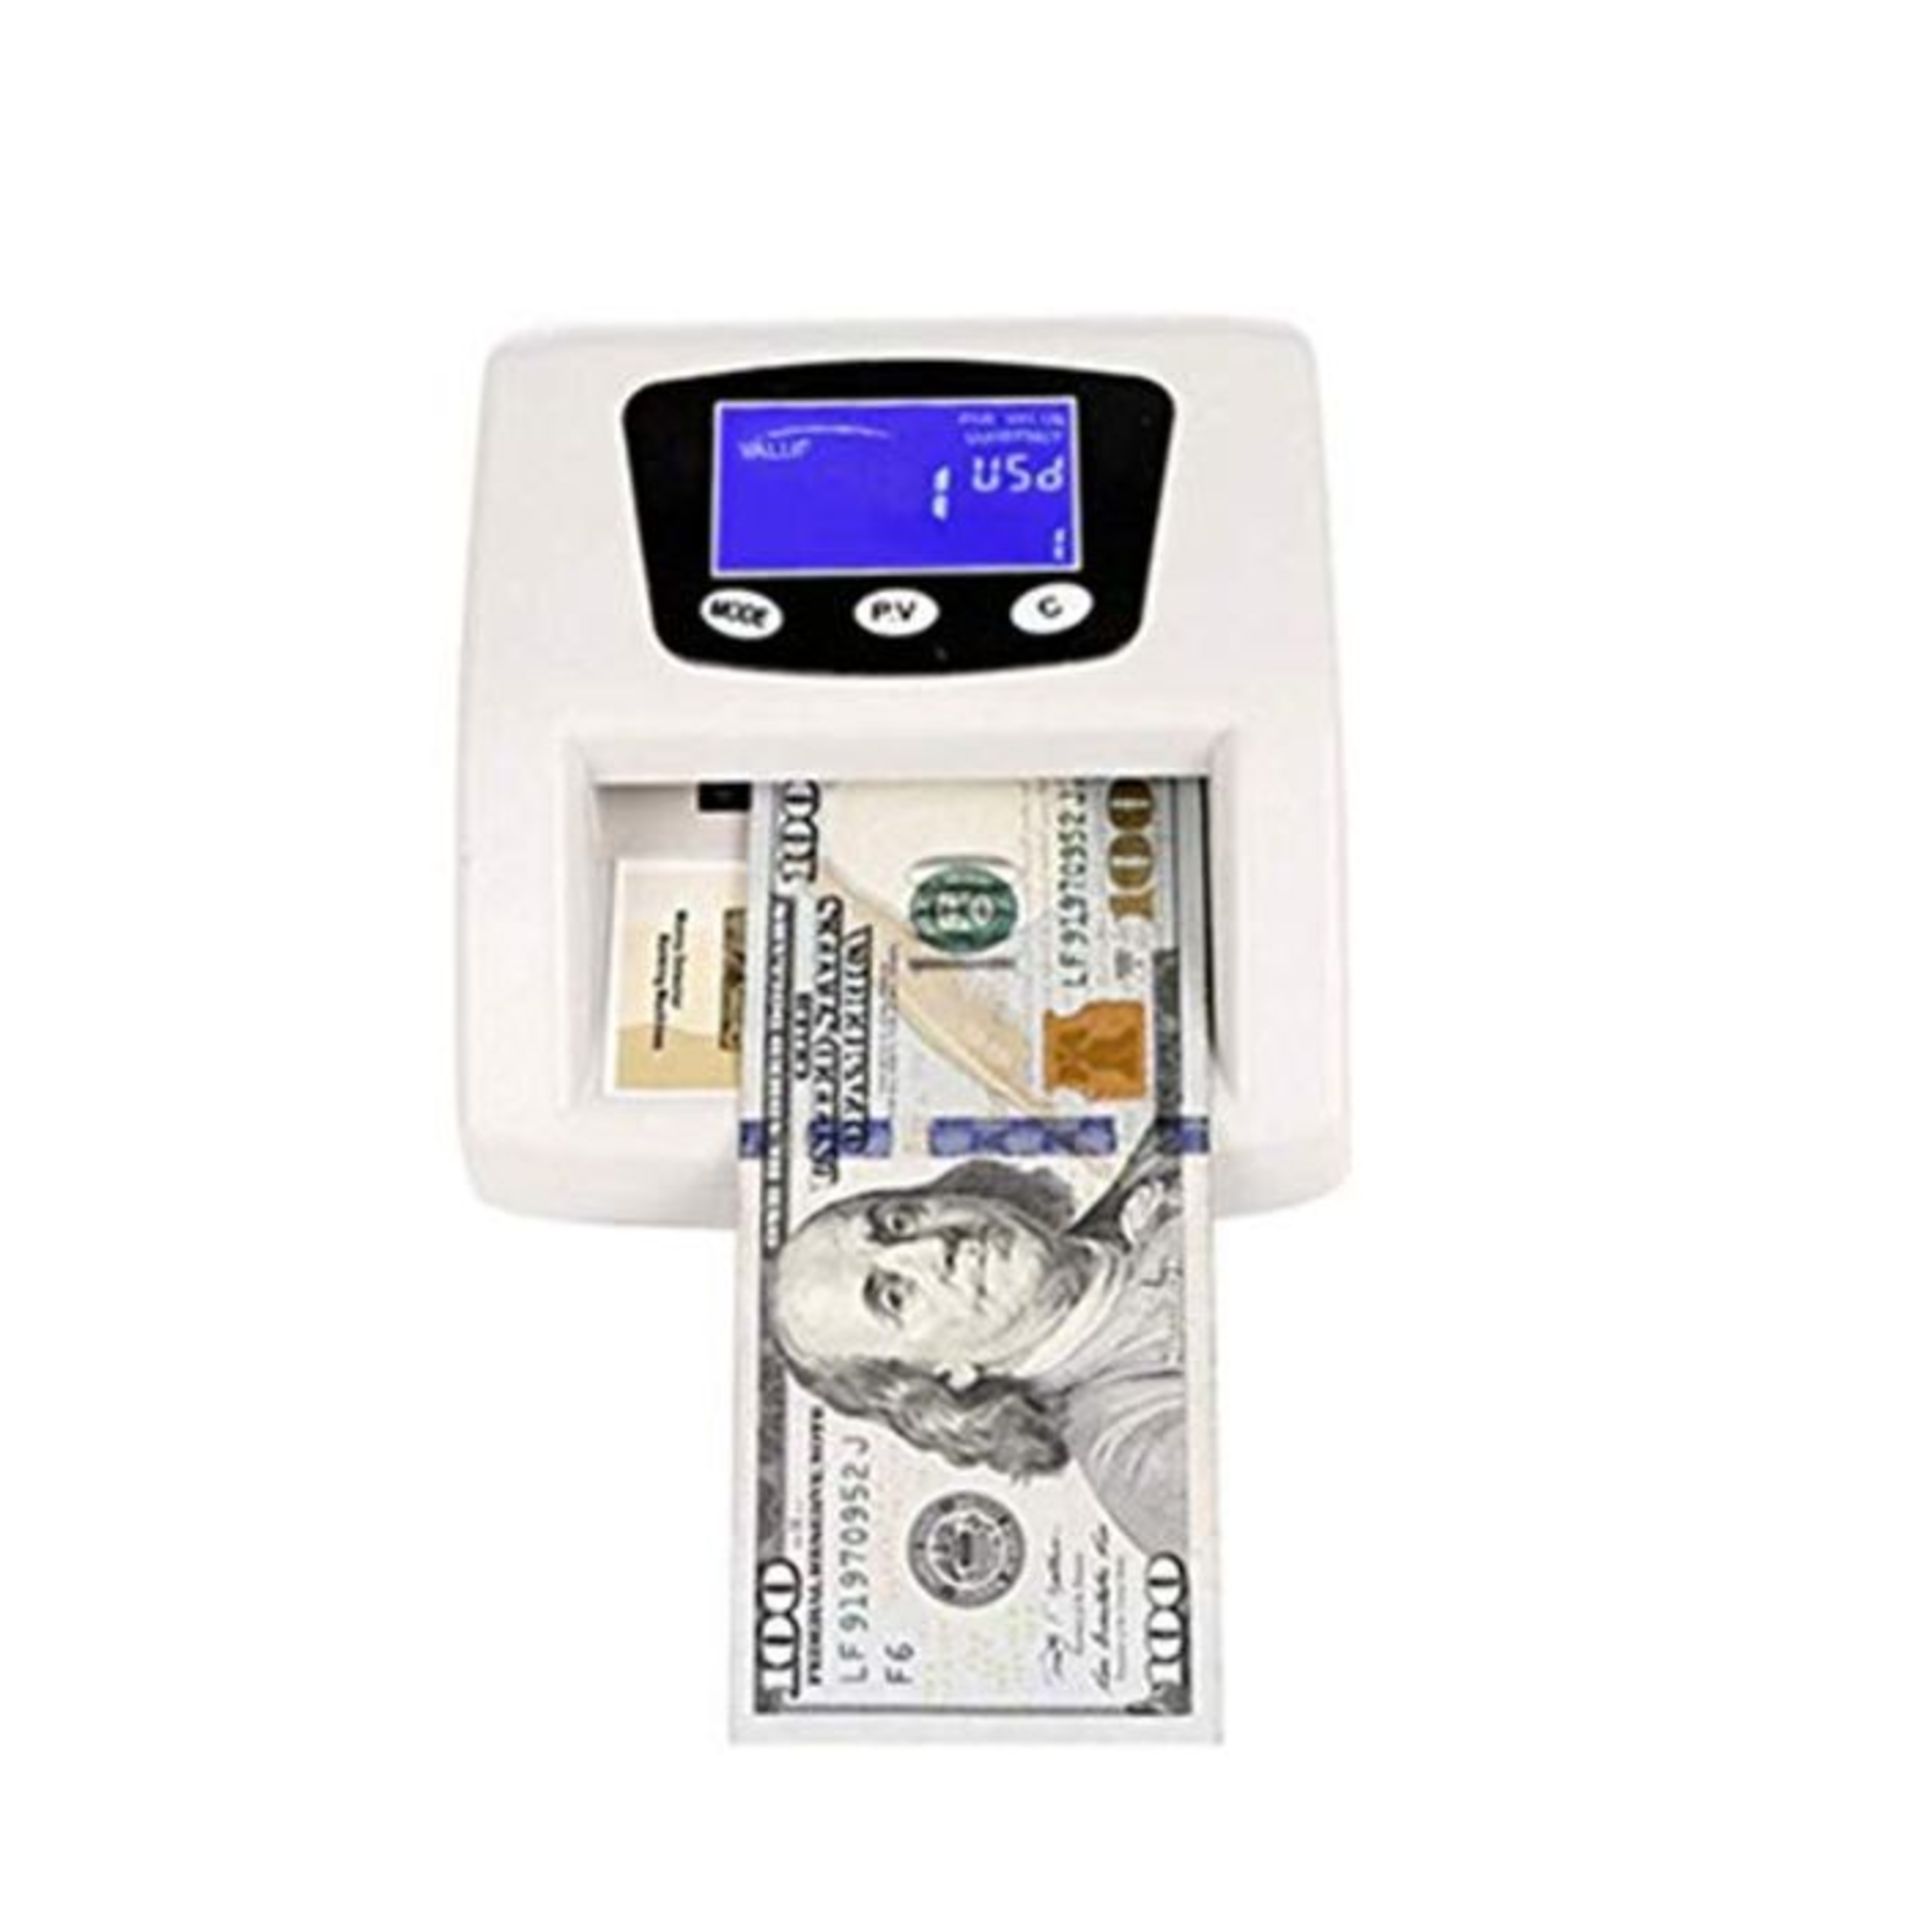 YUNFEILIU Banknote Bill Detector Denomination Value Counter UV/MG/IR Detection Counter